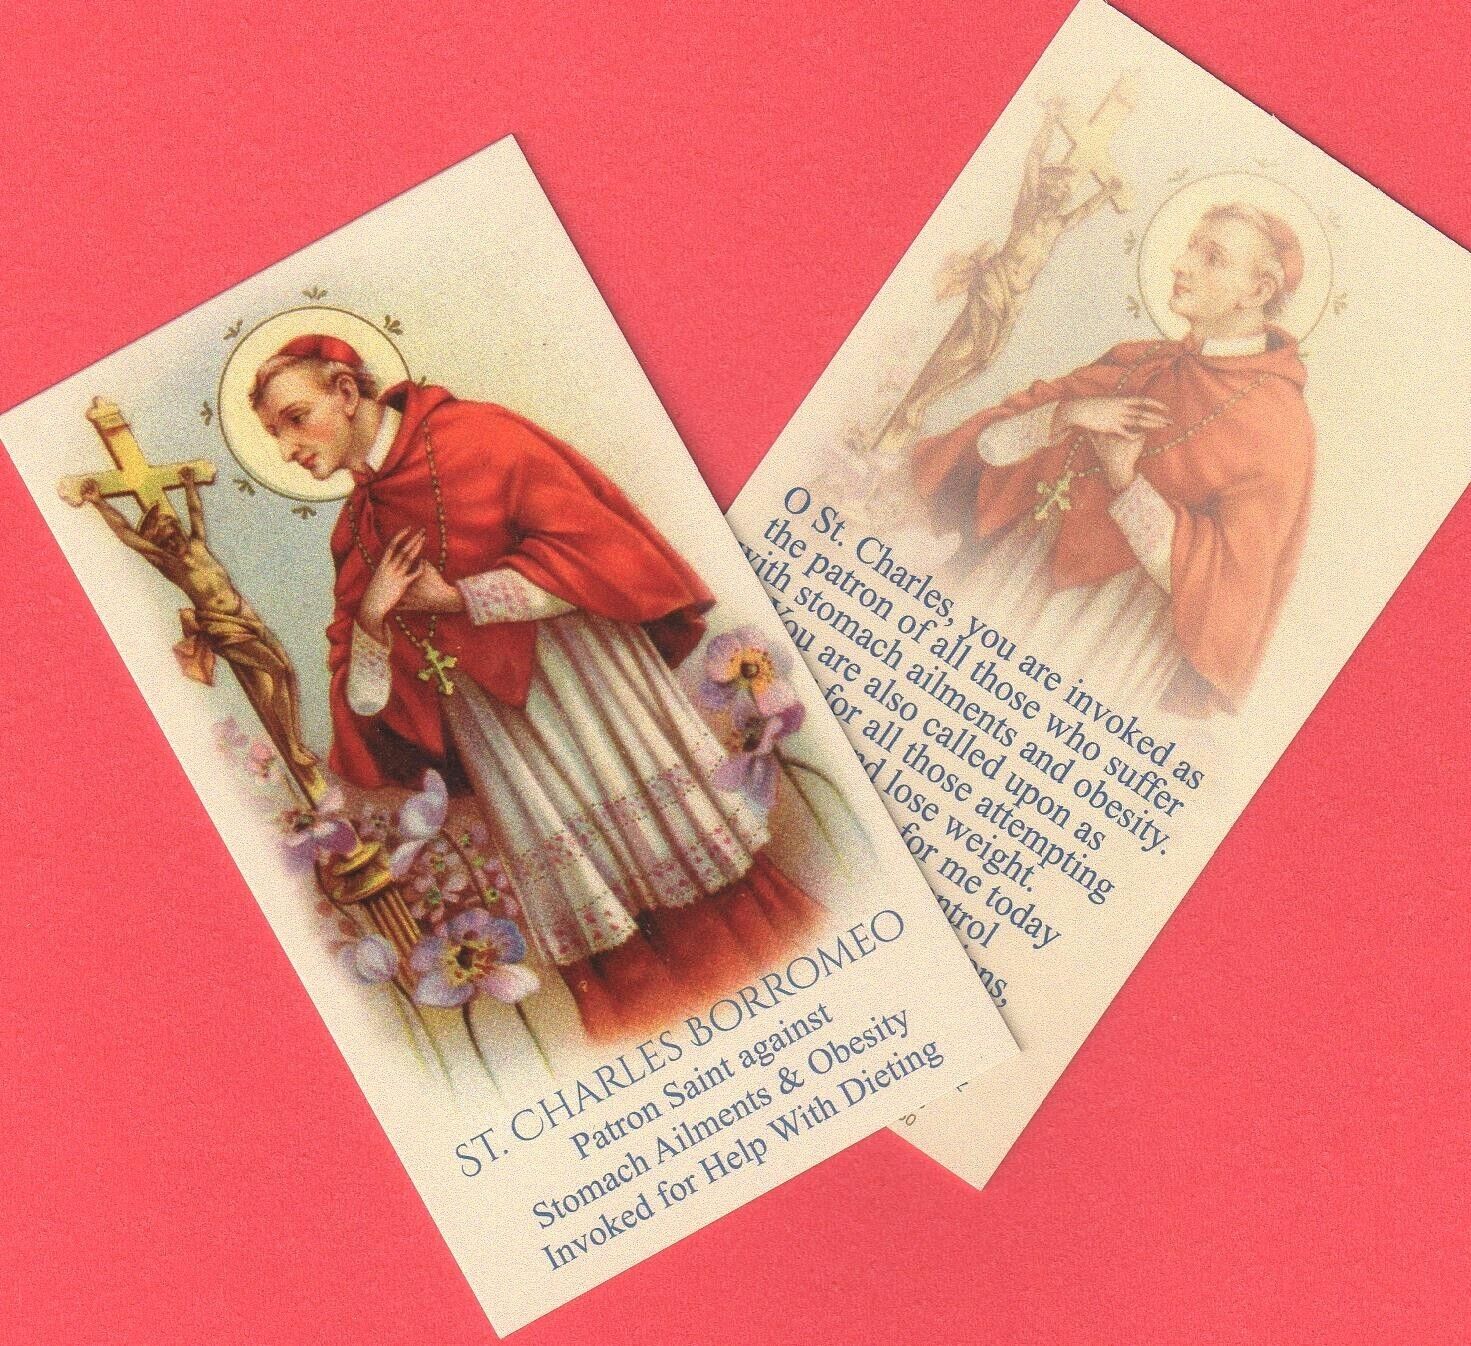 St Charles Borromeo Prayer for Obesity and Stomach Wonderful Image Holy Card